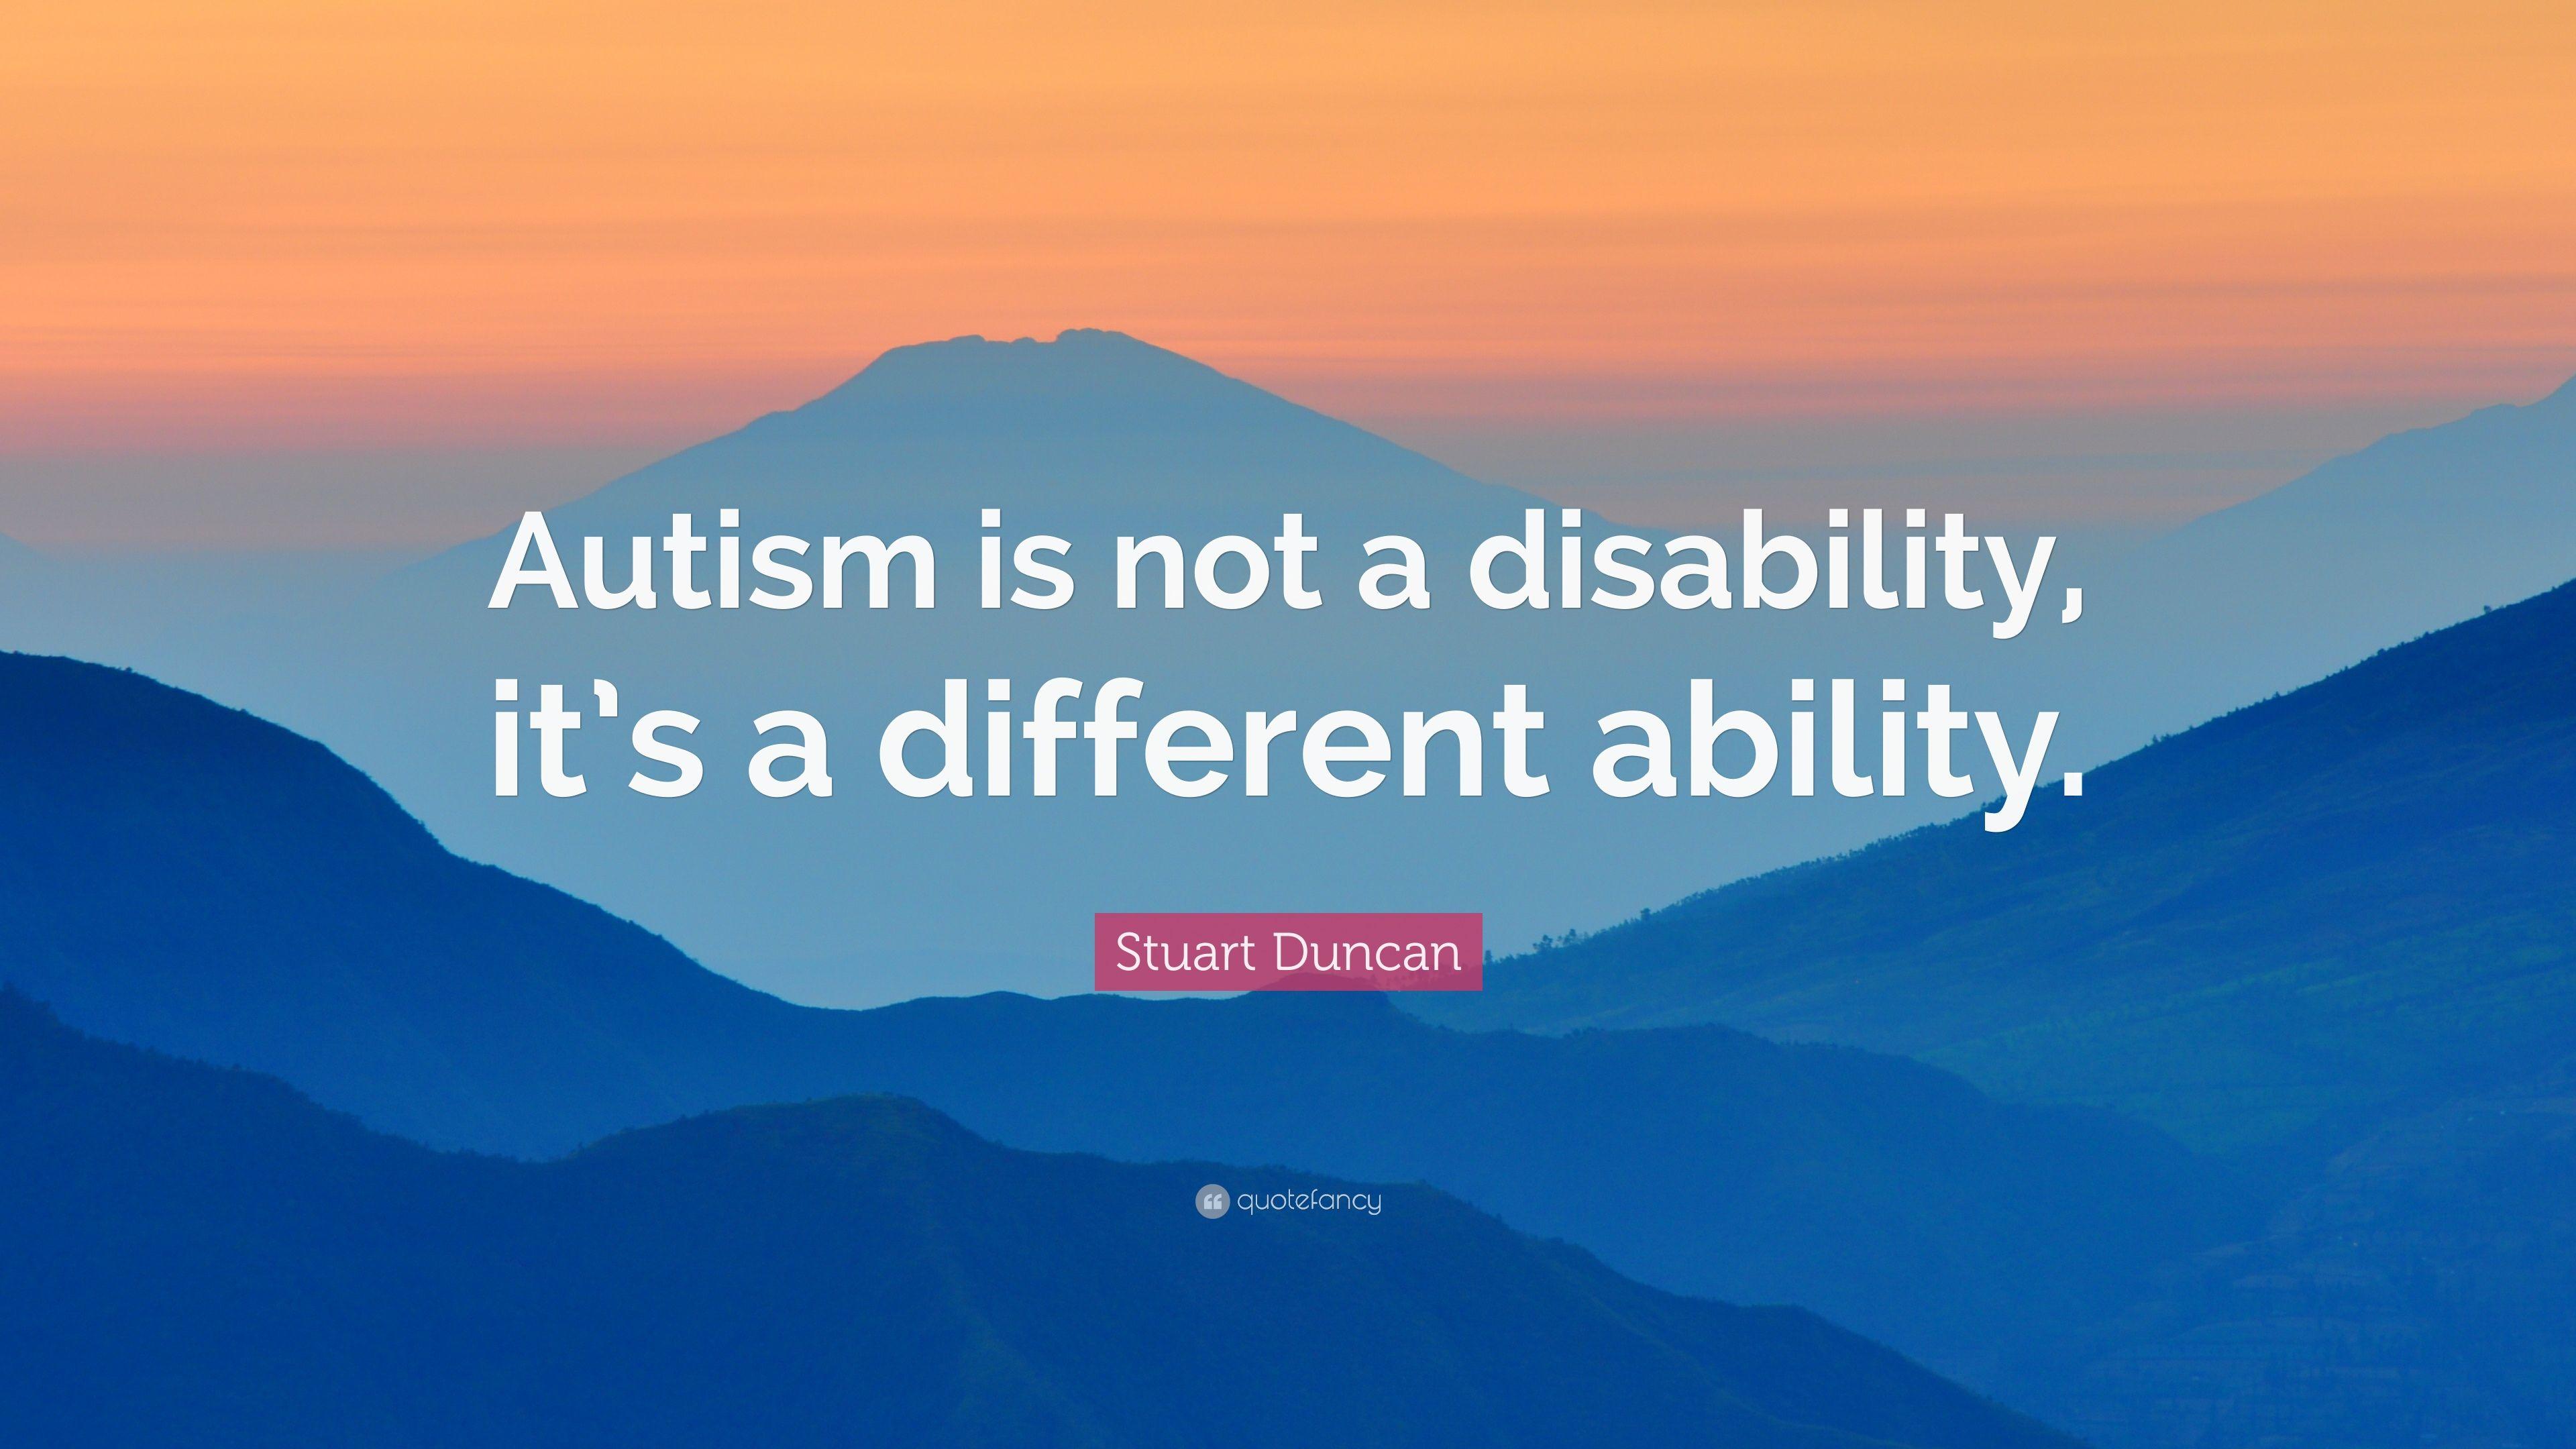 Stuart Duncan Quote: “Autism is not a disability, it's a different